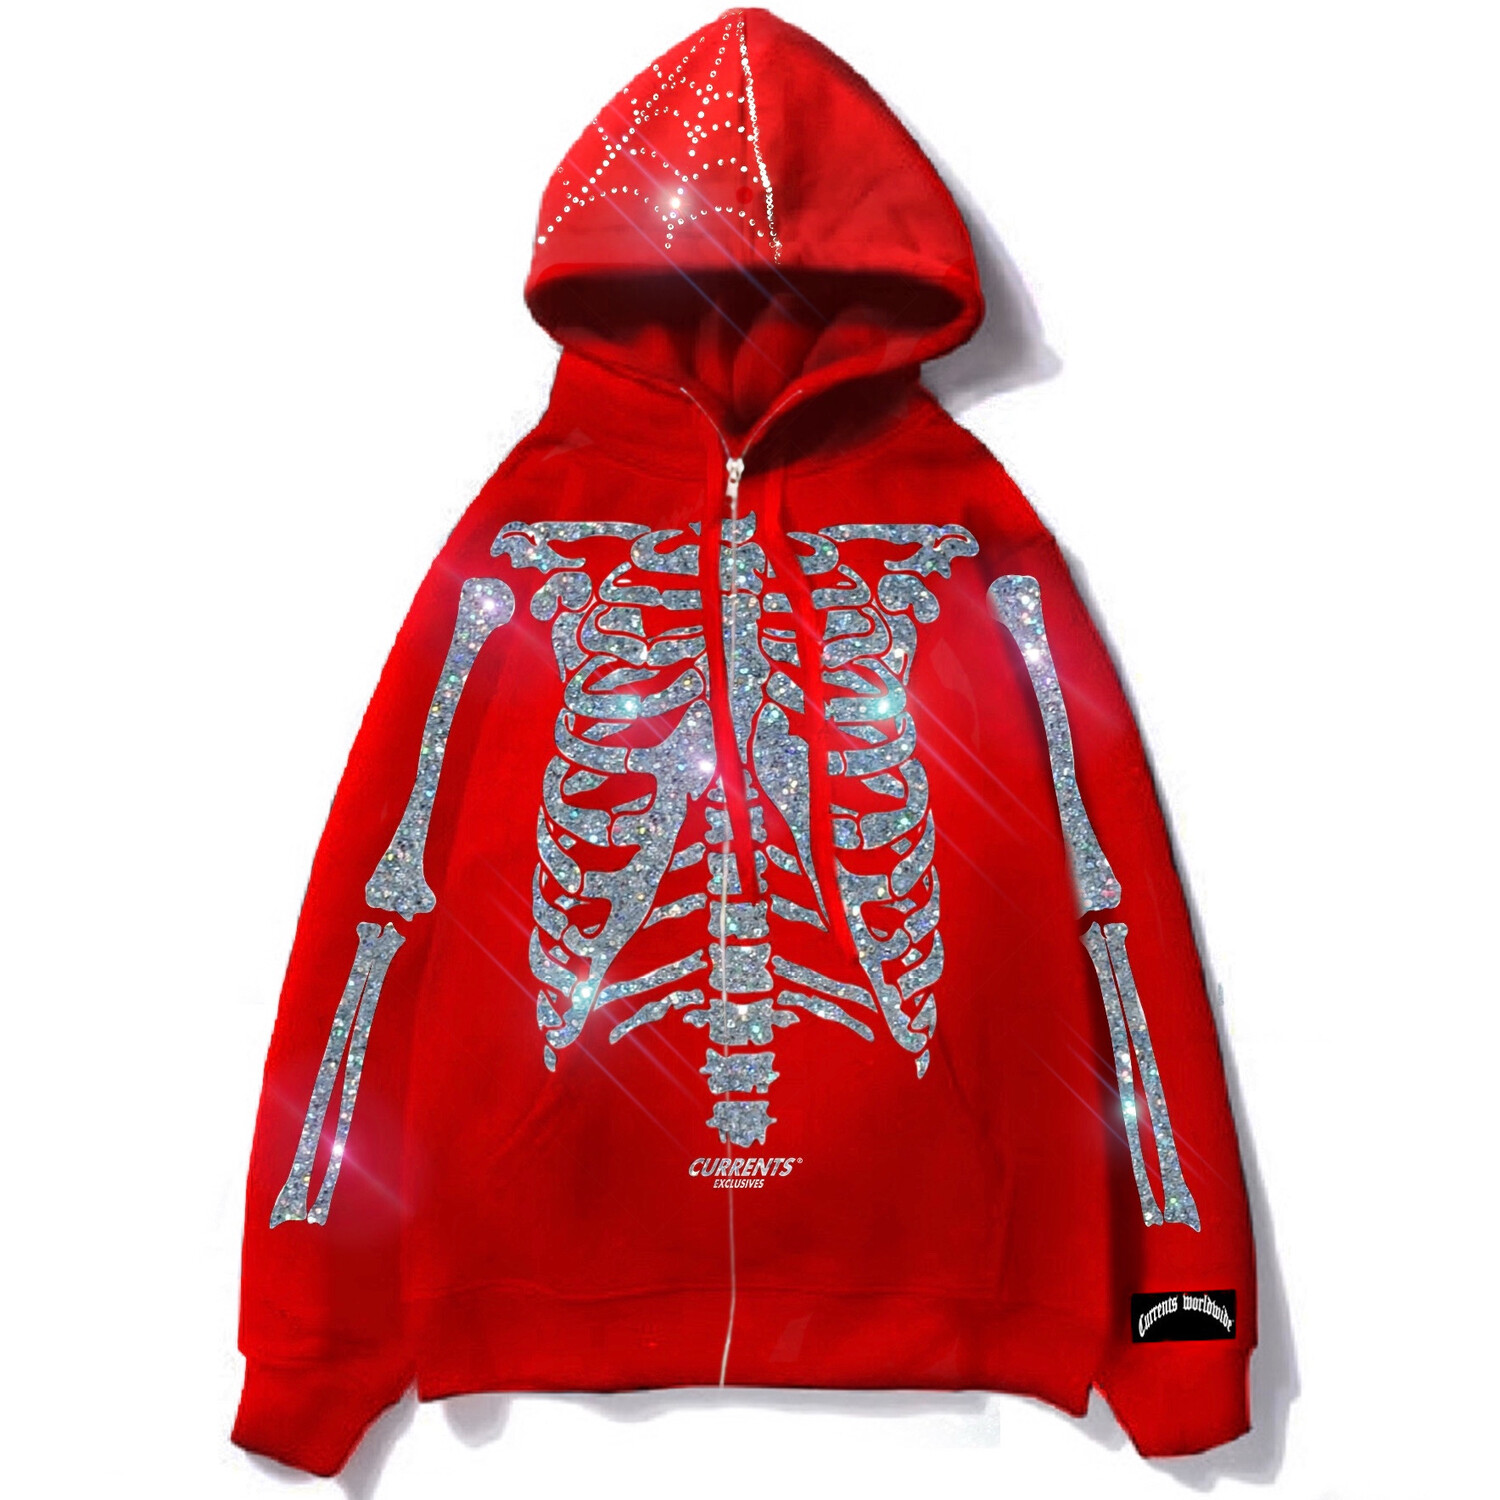 Reflective Red Skeleton Hoodie